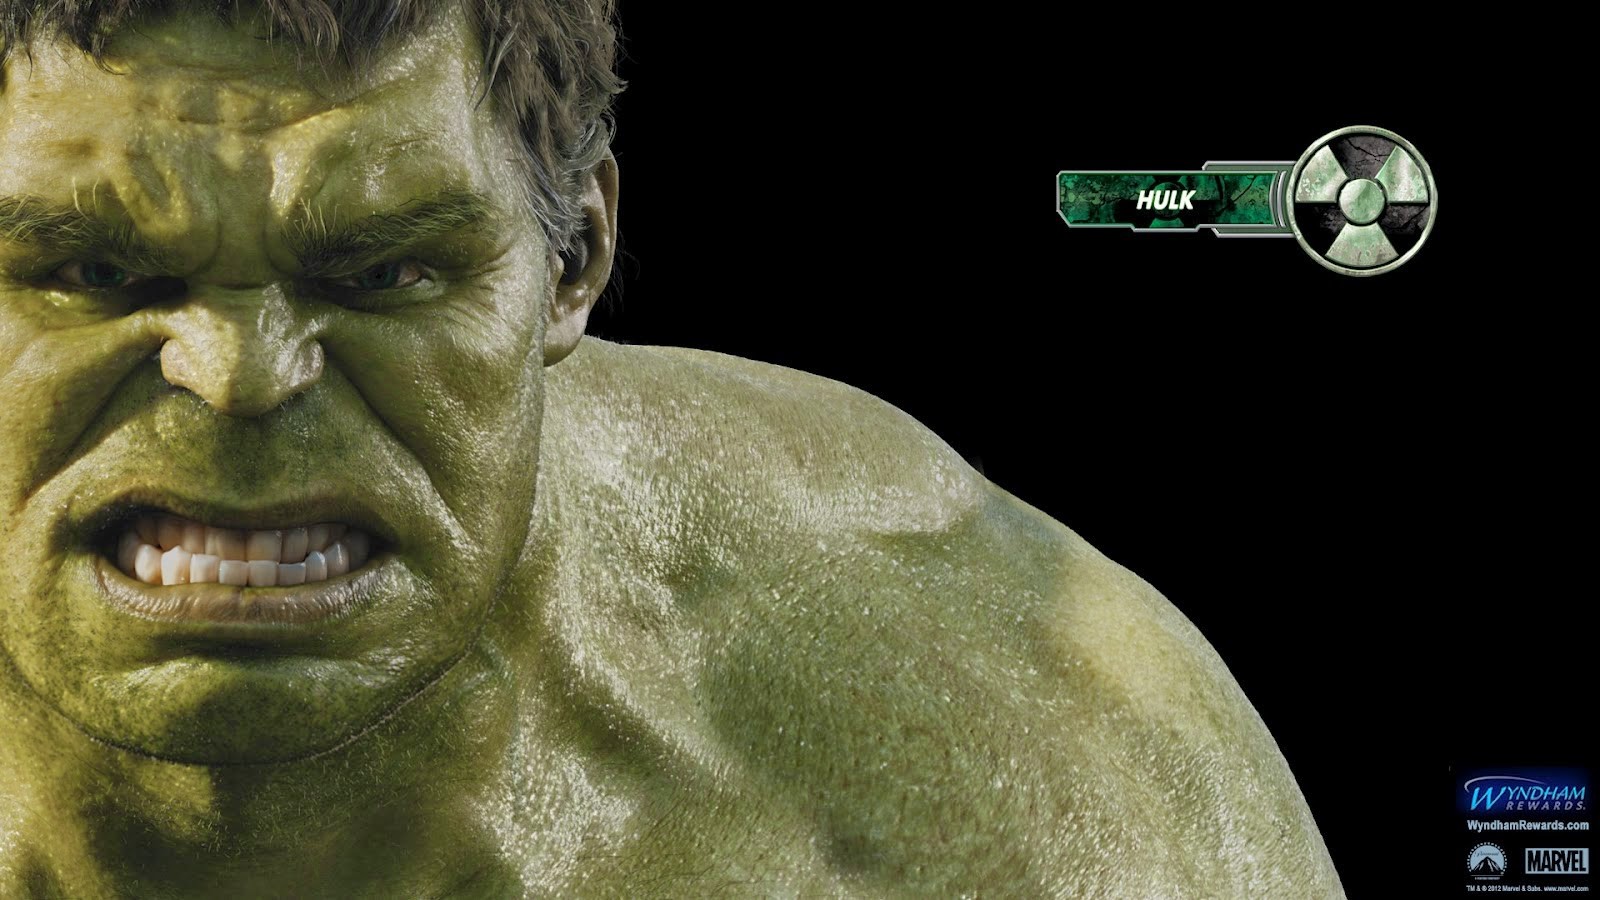 General 1600x900 Hulk The Avengers movies Marvel Cinematic Universe green skin